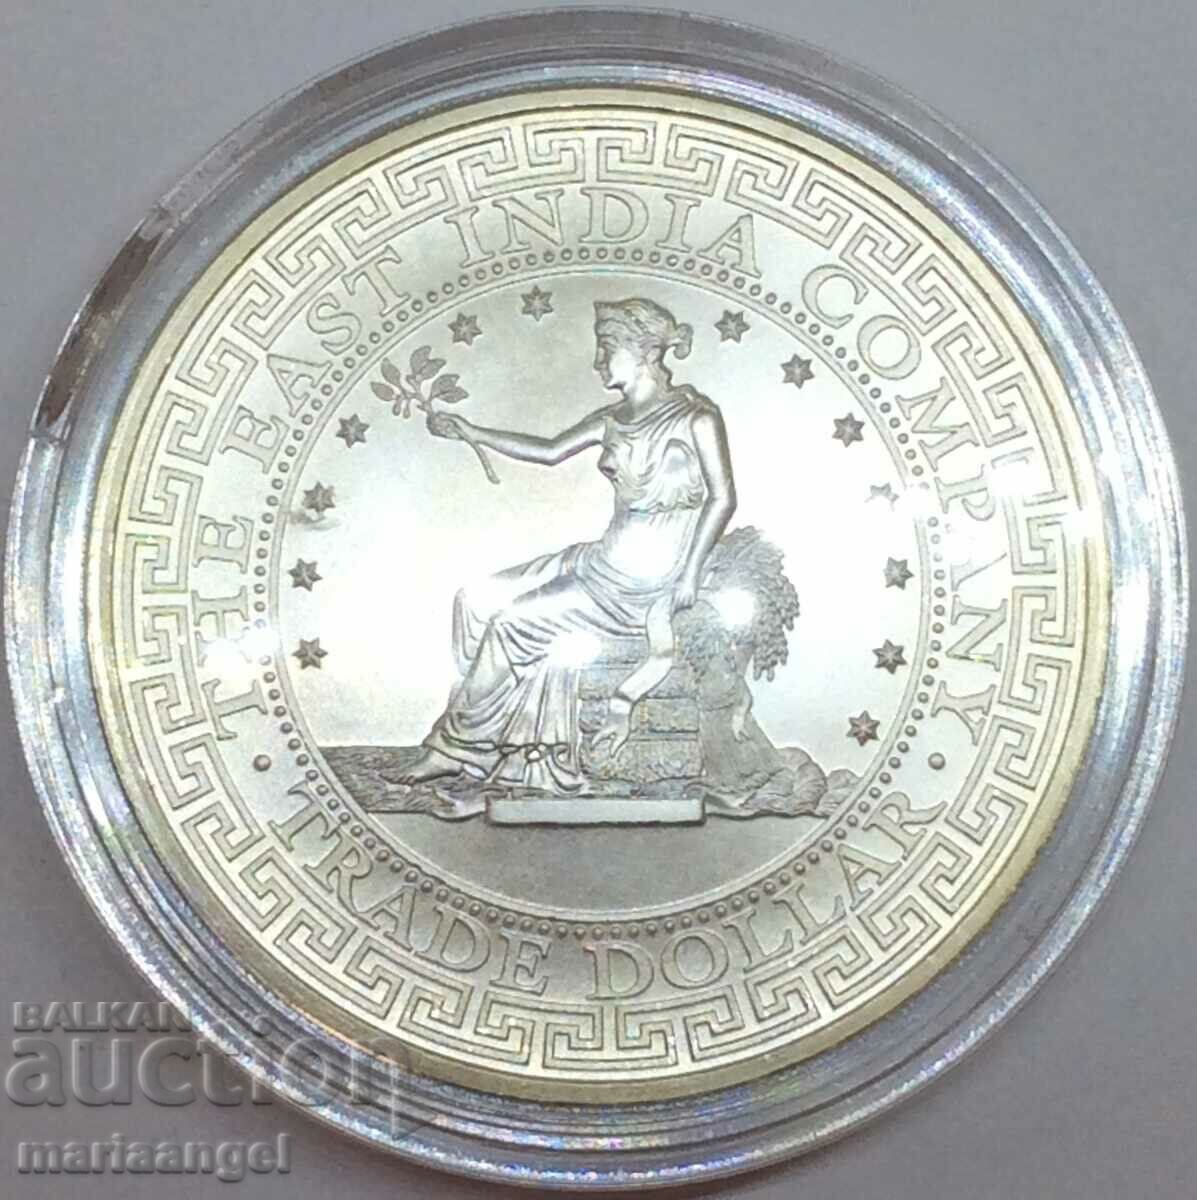 1 Pound 2018 St. Elena Great Britain Trade dollar silver